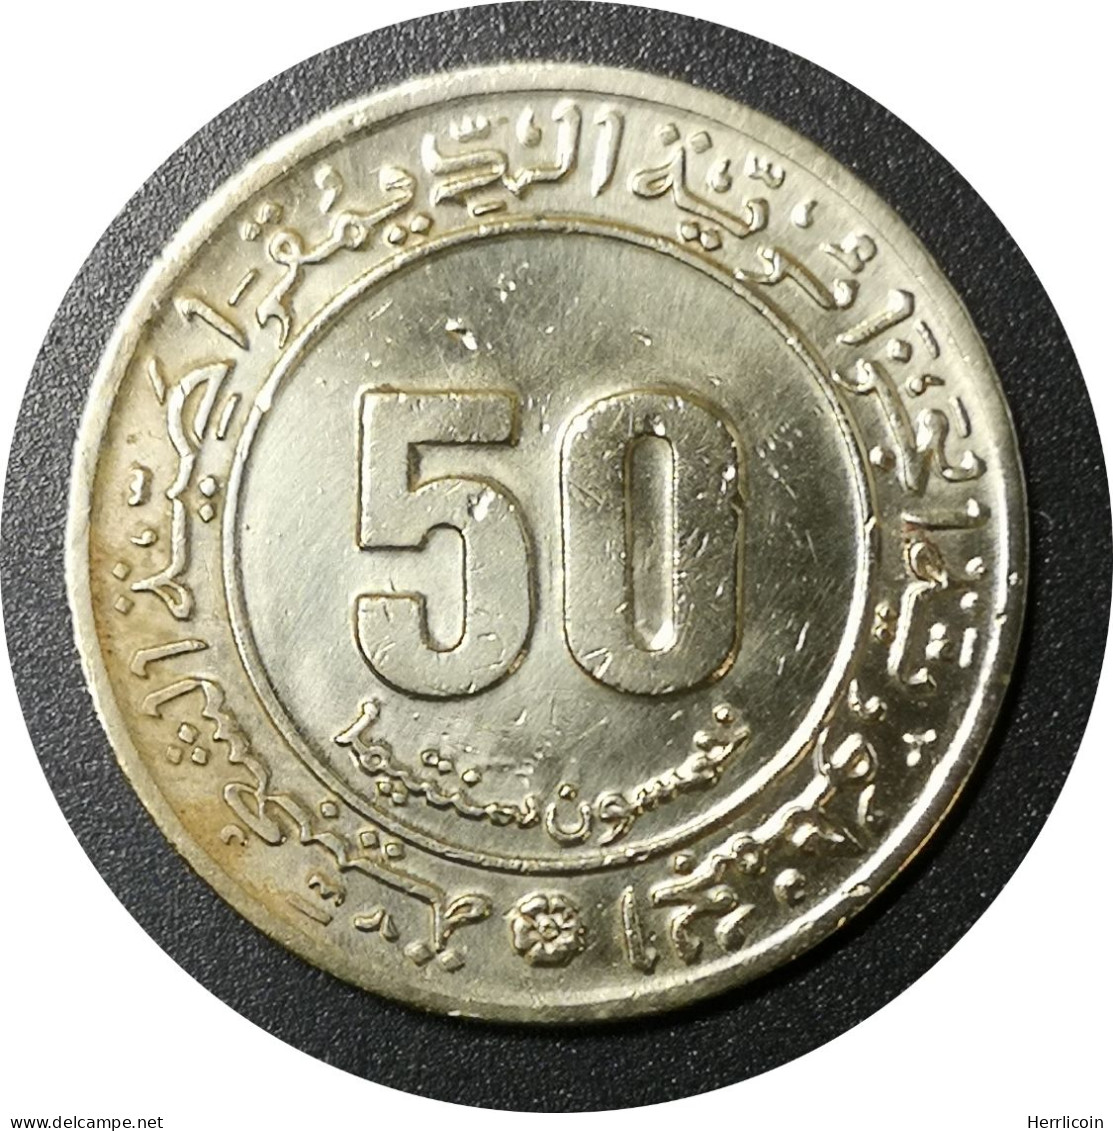 Monnaie Algérie - 1975 - 50 Centimes - Algeria